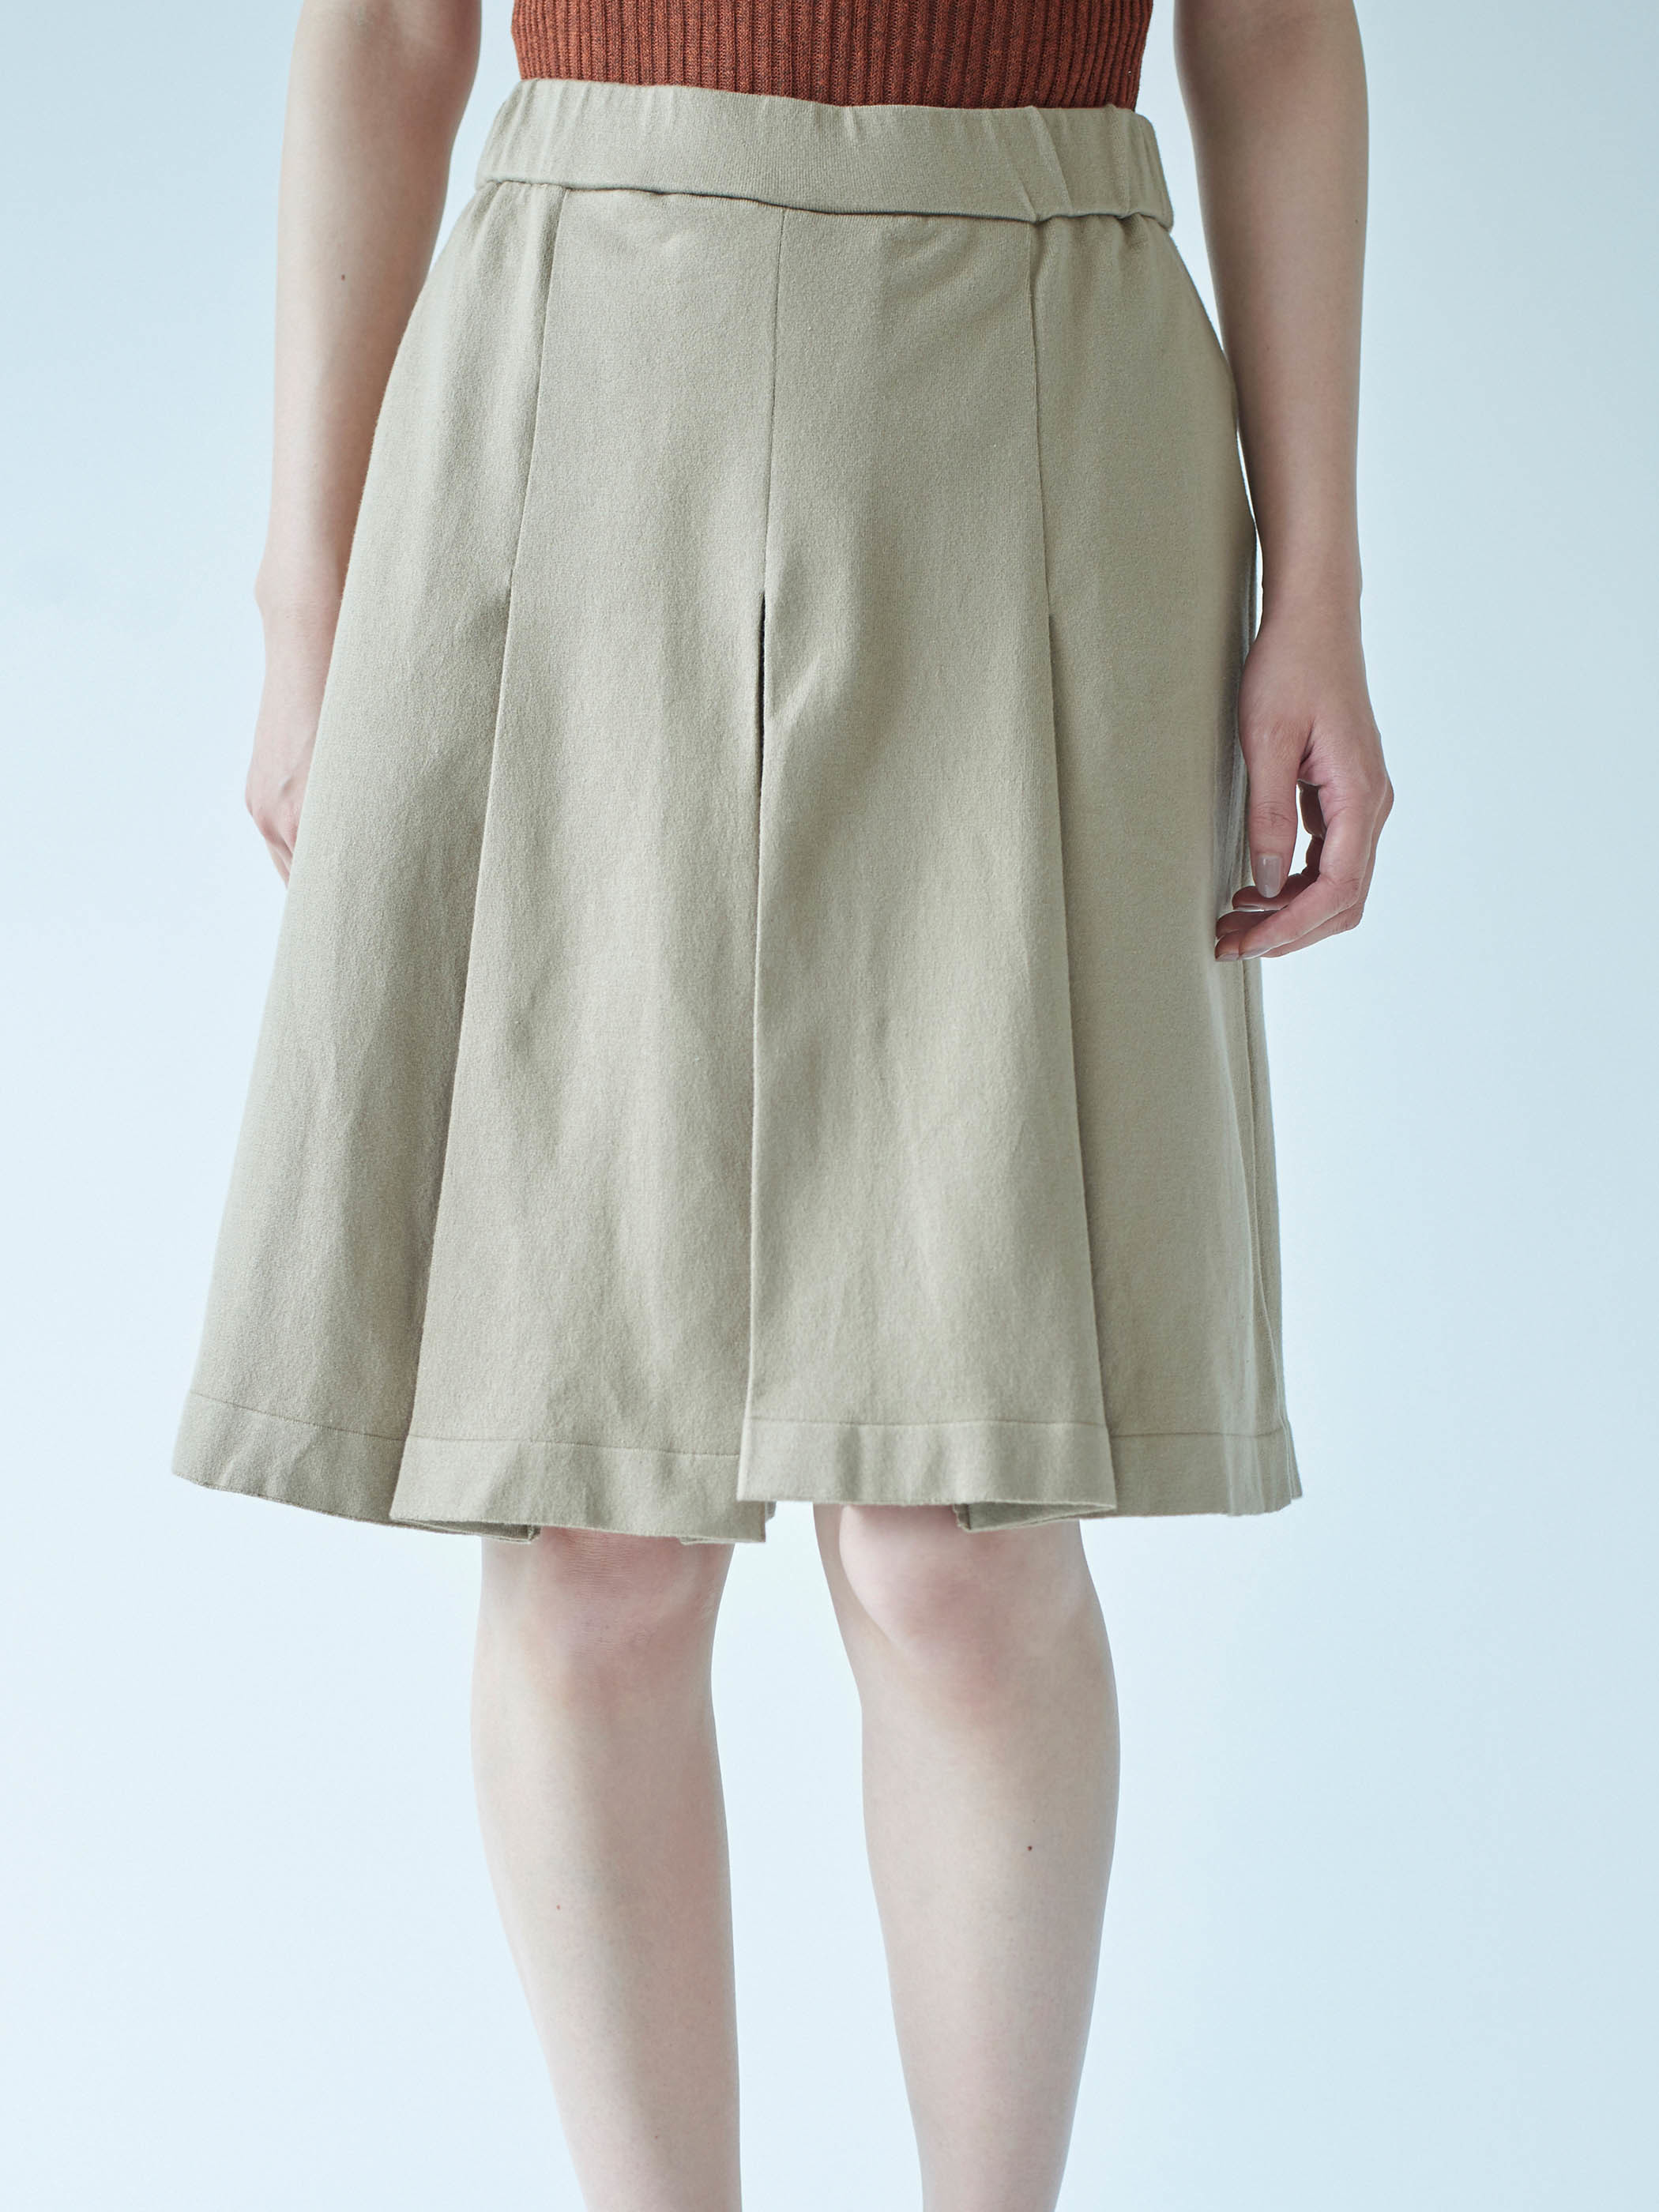 KNITOLOGY | Work Wear collection Women's Culotte Skirt Beige